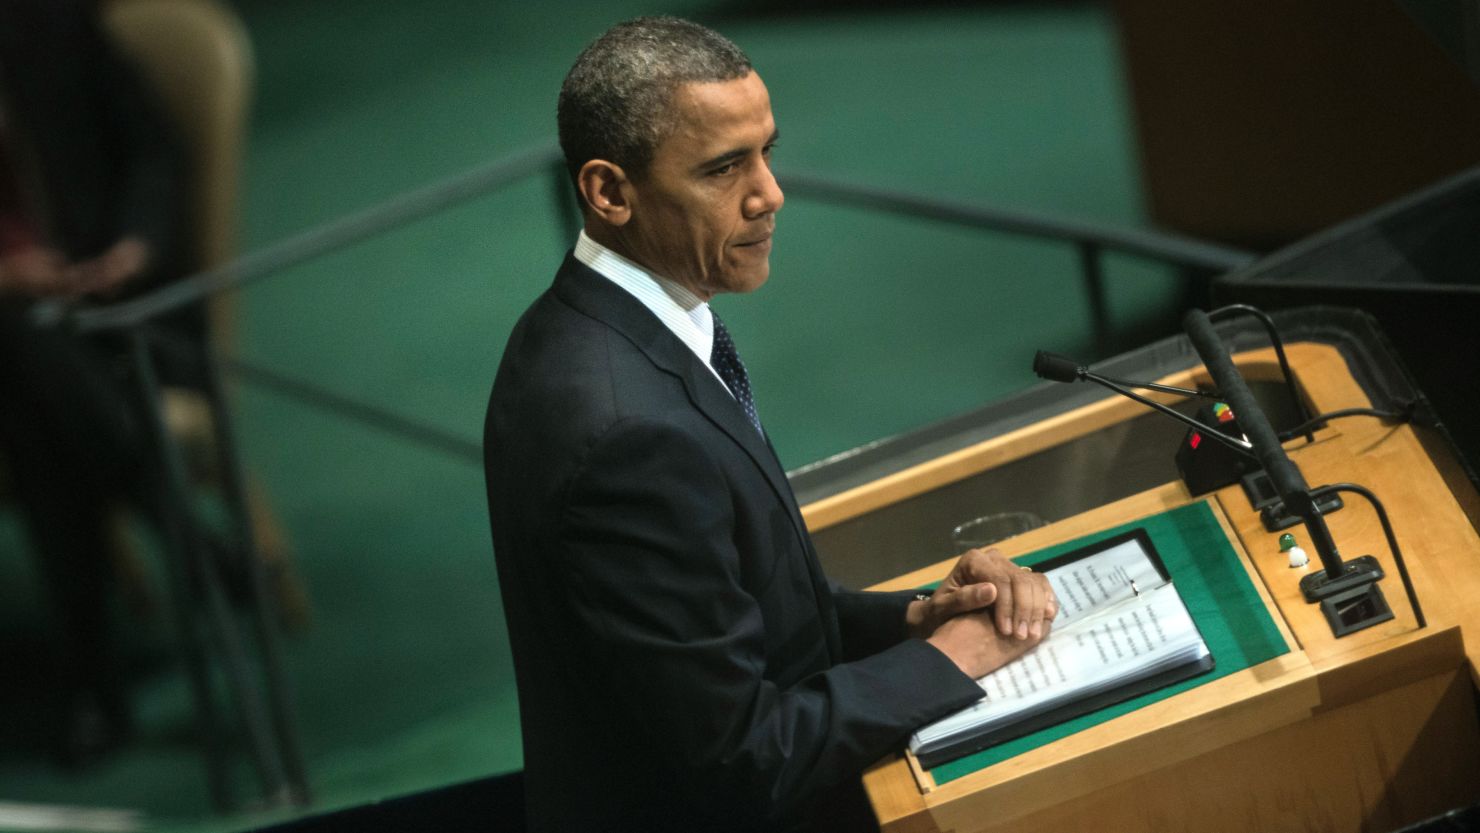 Richard Williamson says President Obama resisted imposing crippling new sanctions on Iran.